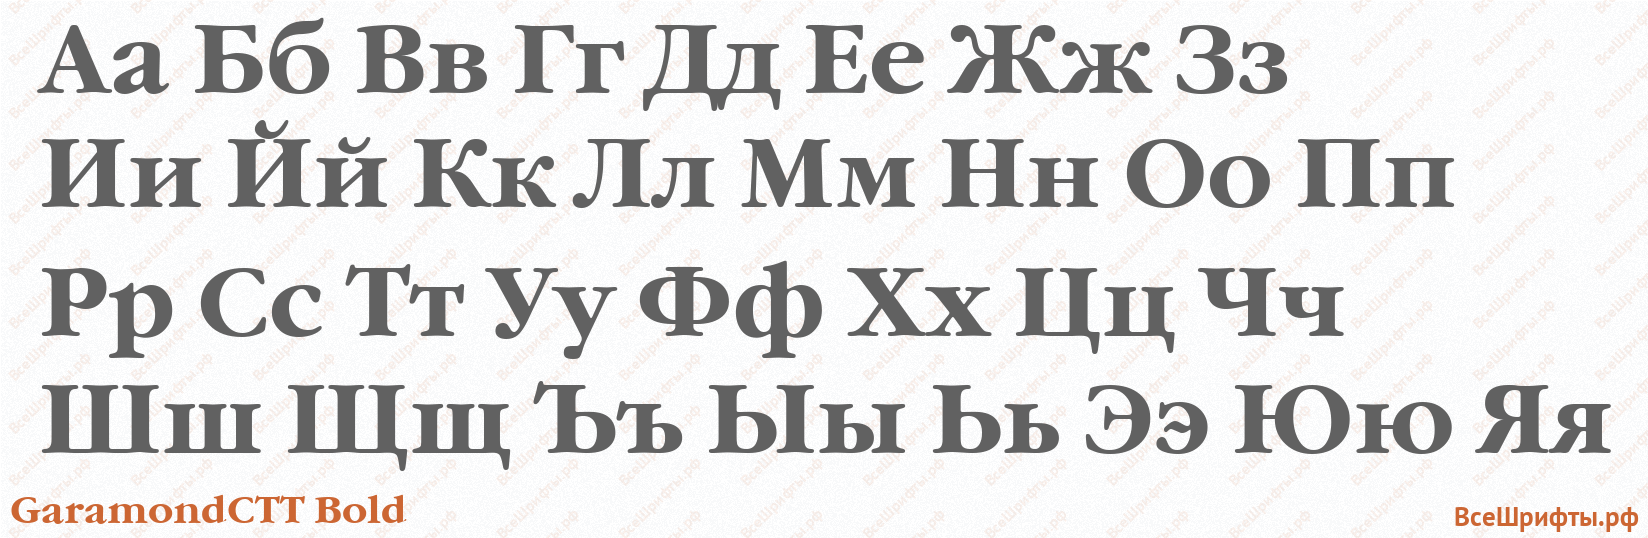 Шрифт GaramondCTT Bold с русскими буквами